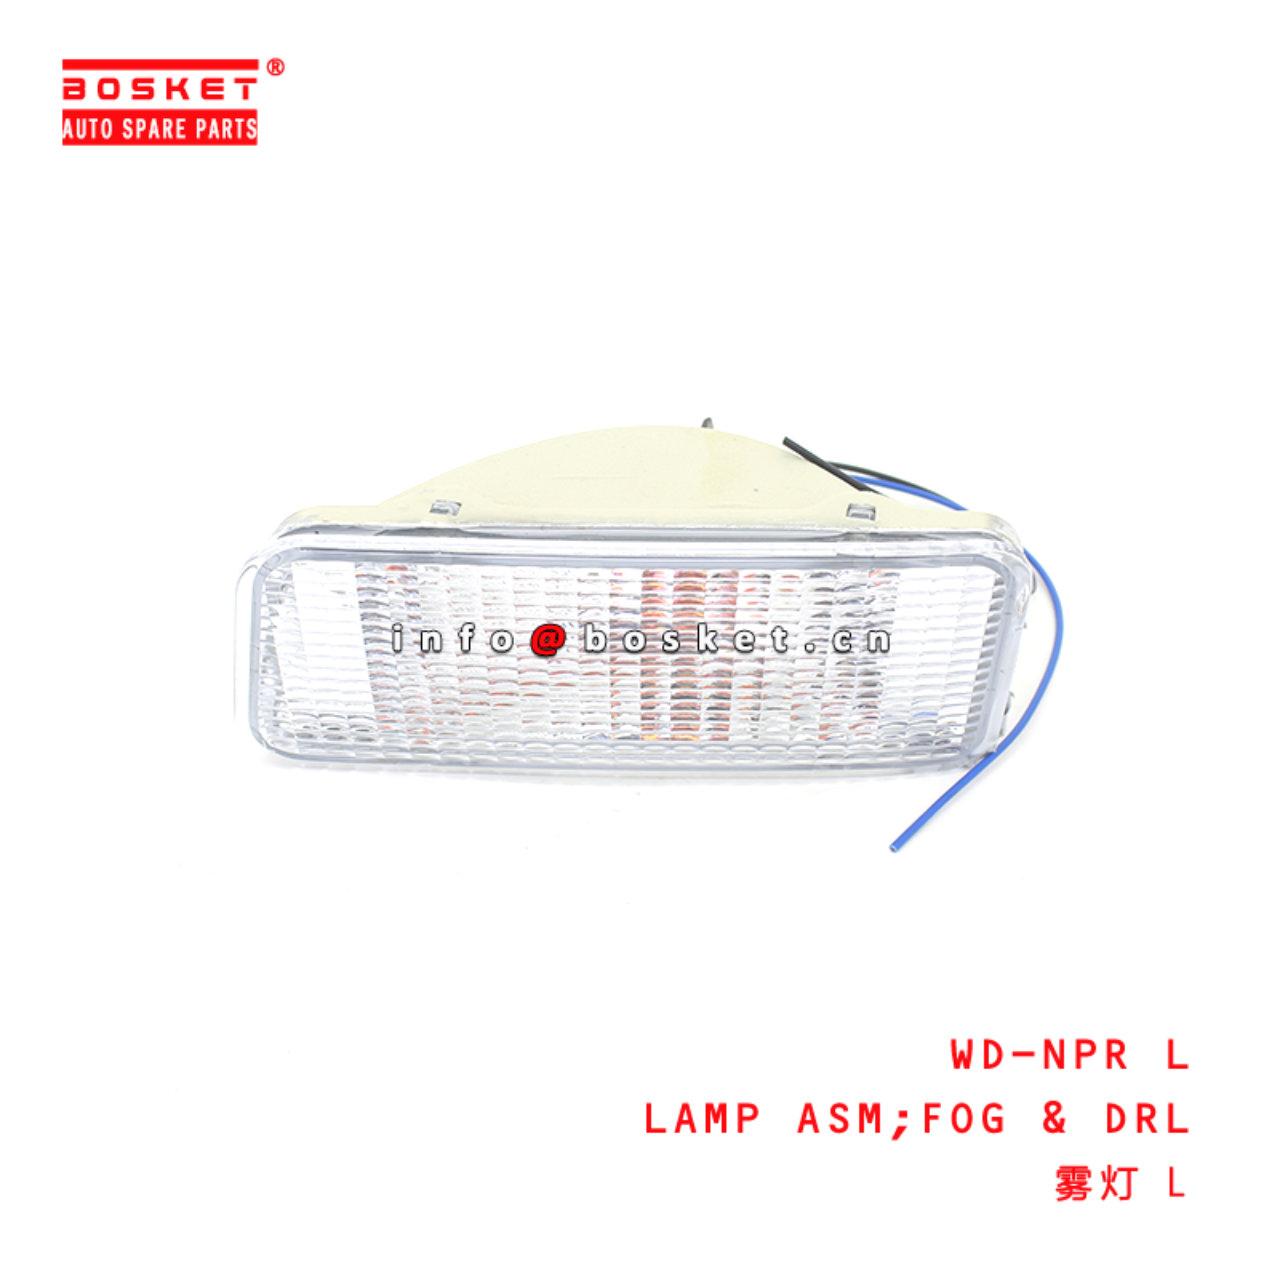 WD-NPR L Fog And Drl Lamp Assembly Suitable for ISUZU NPR WD-NPR L